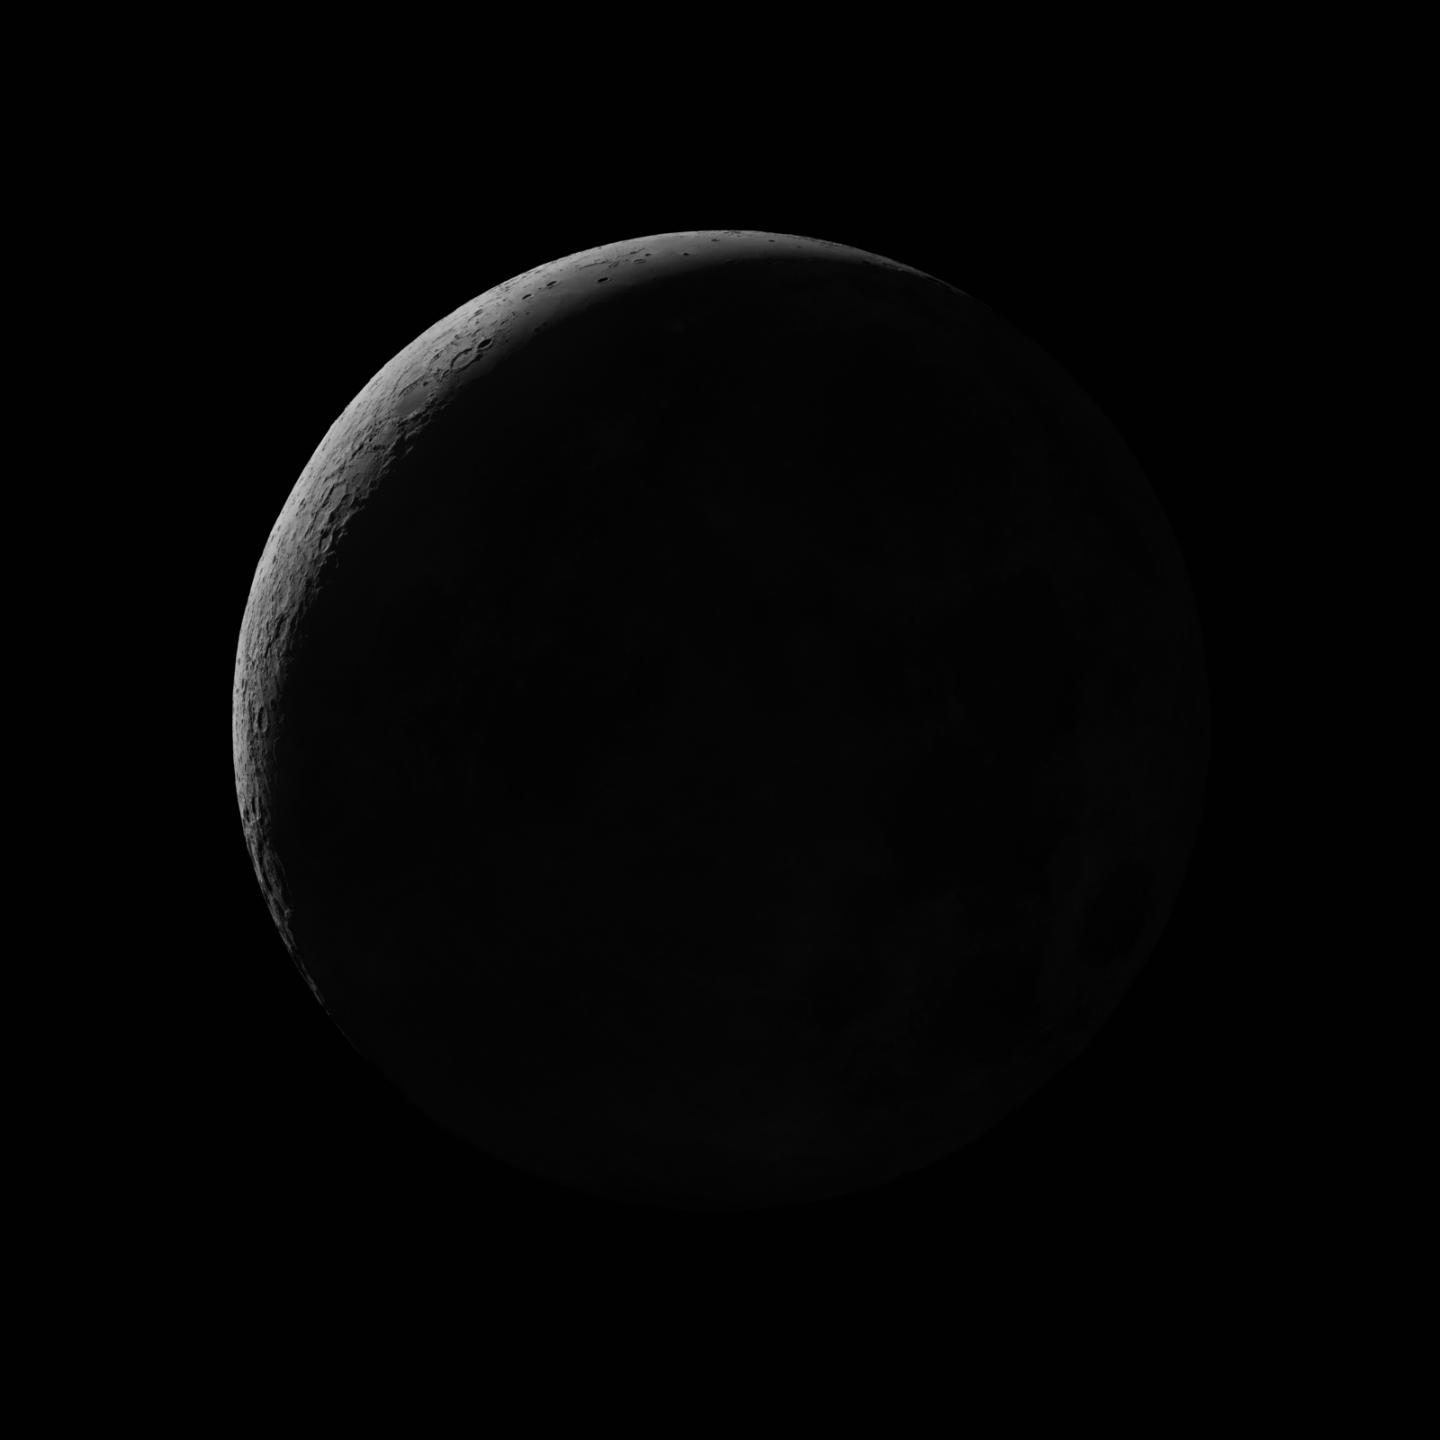 Dark photograph of a crescent Moon